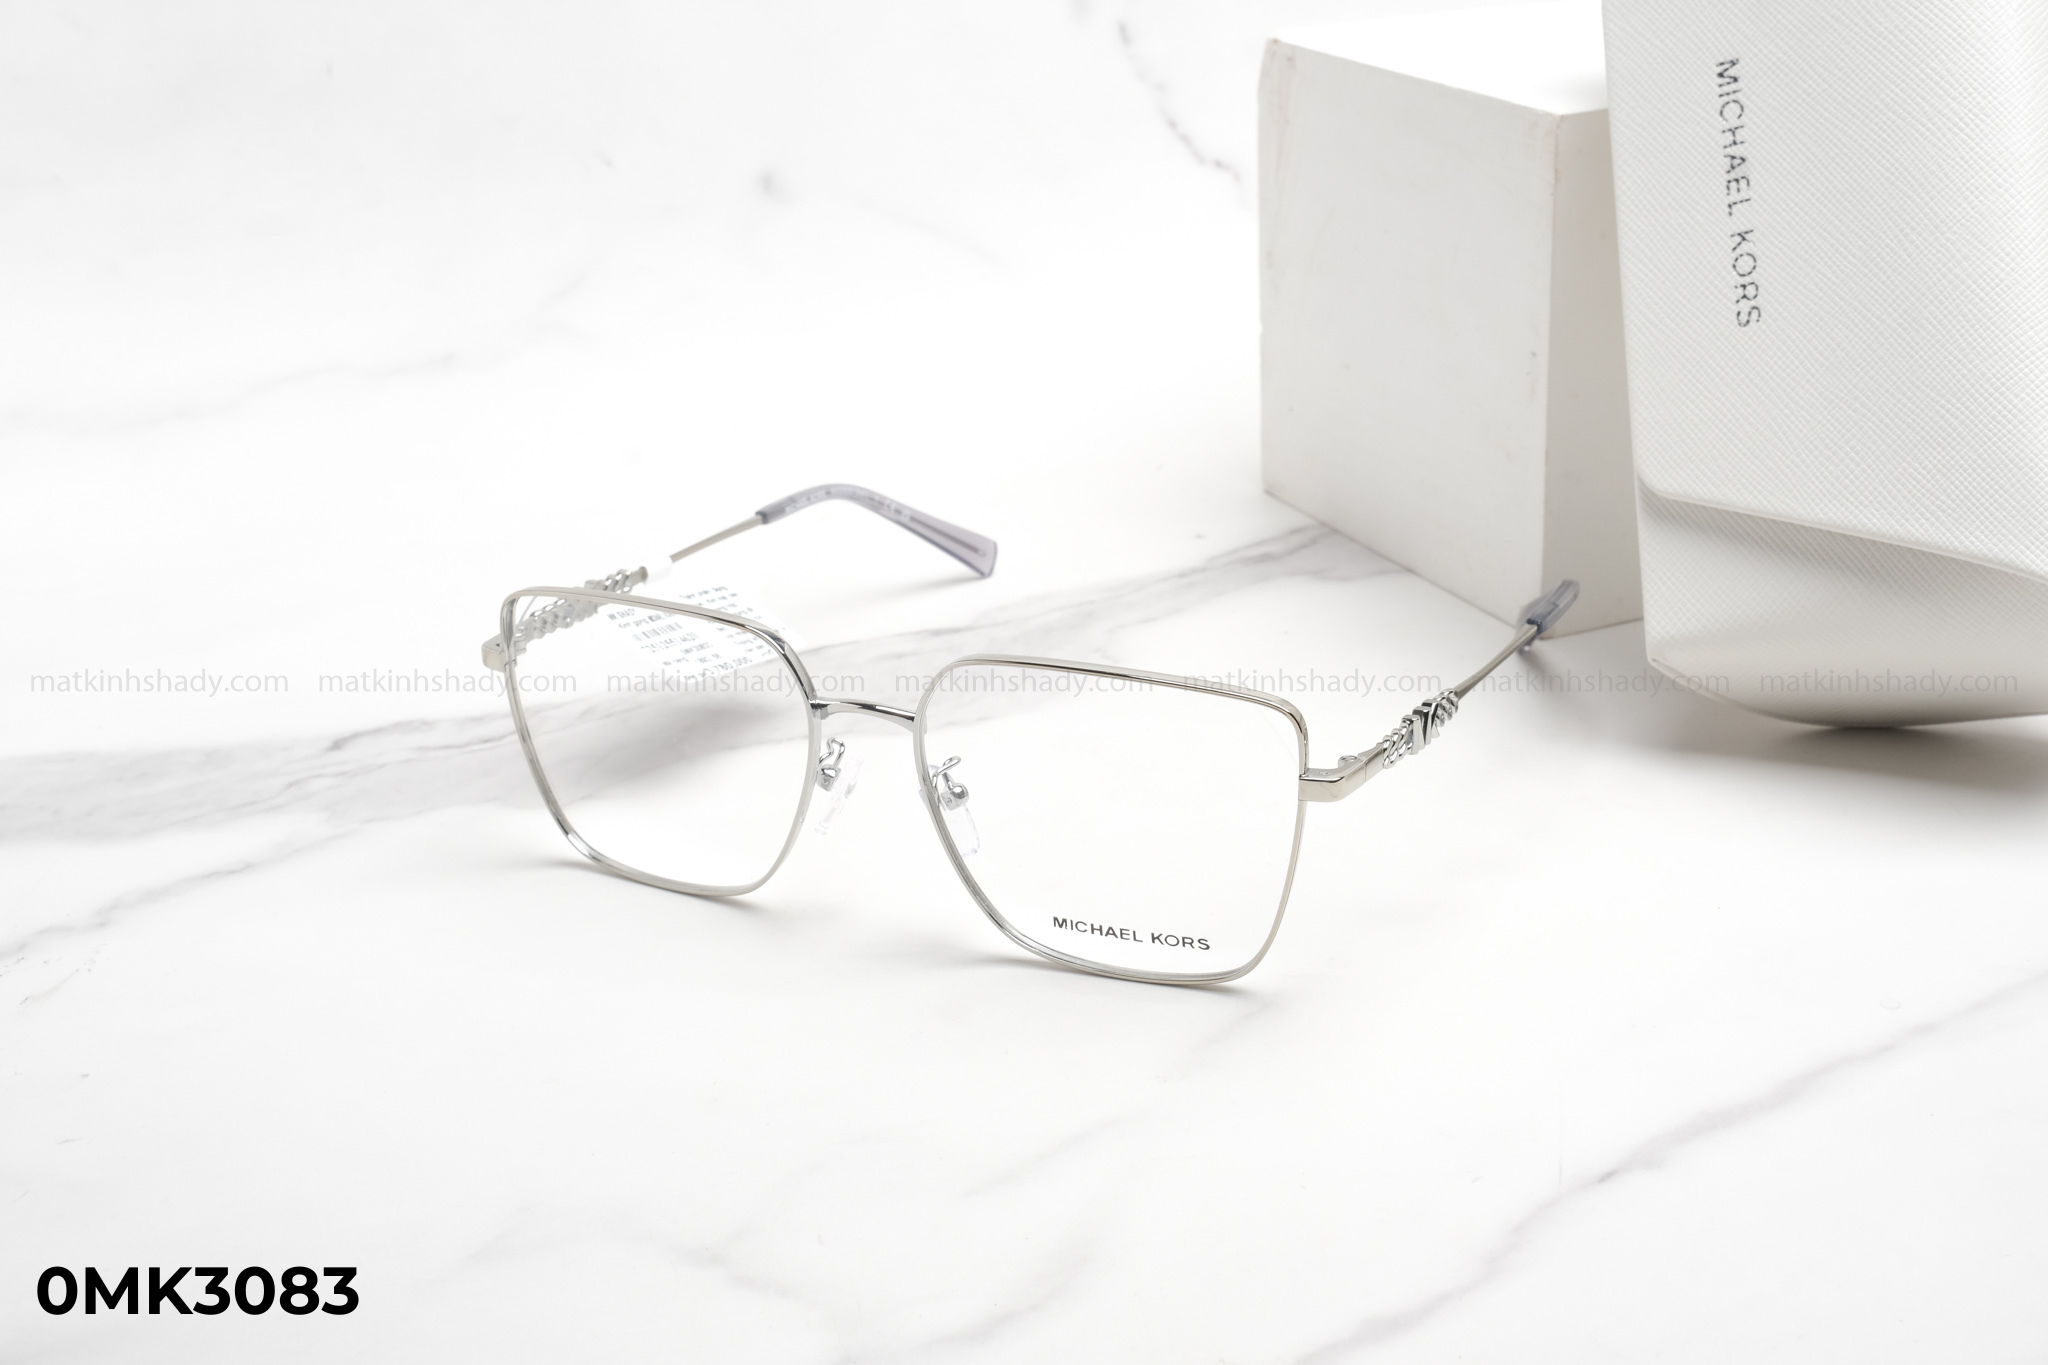  Michael Kors Eyewear - Glasses - 0MK3083 